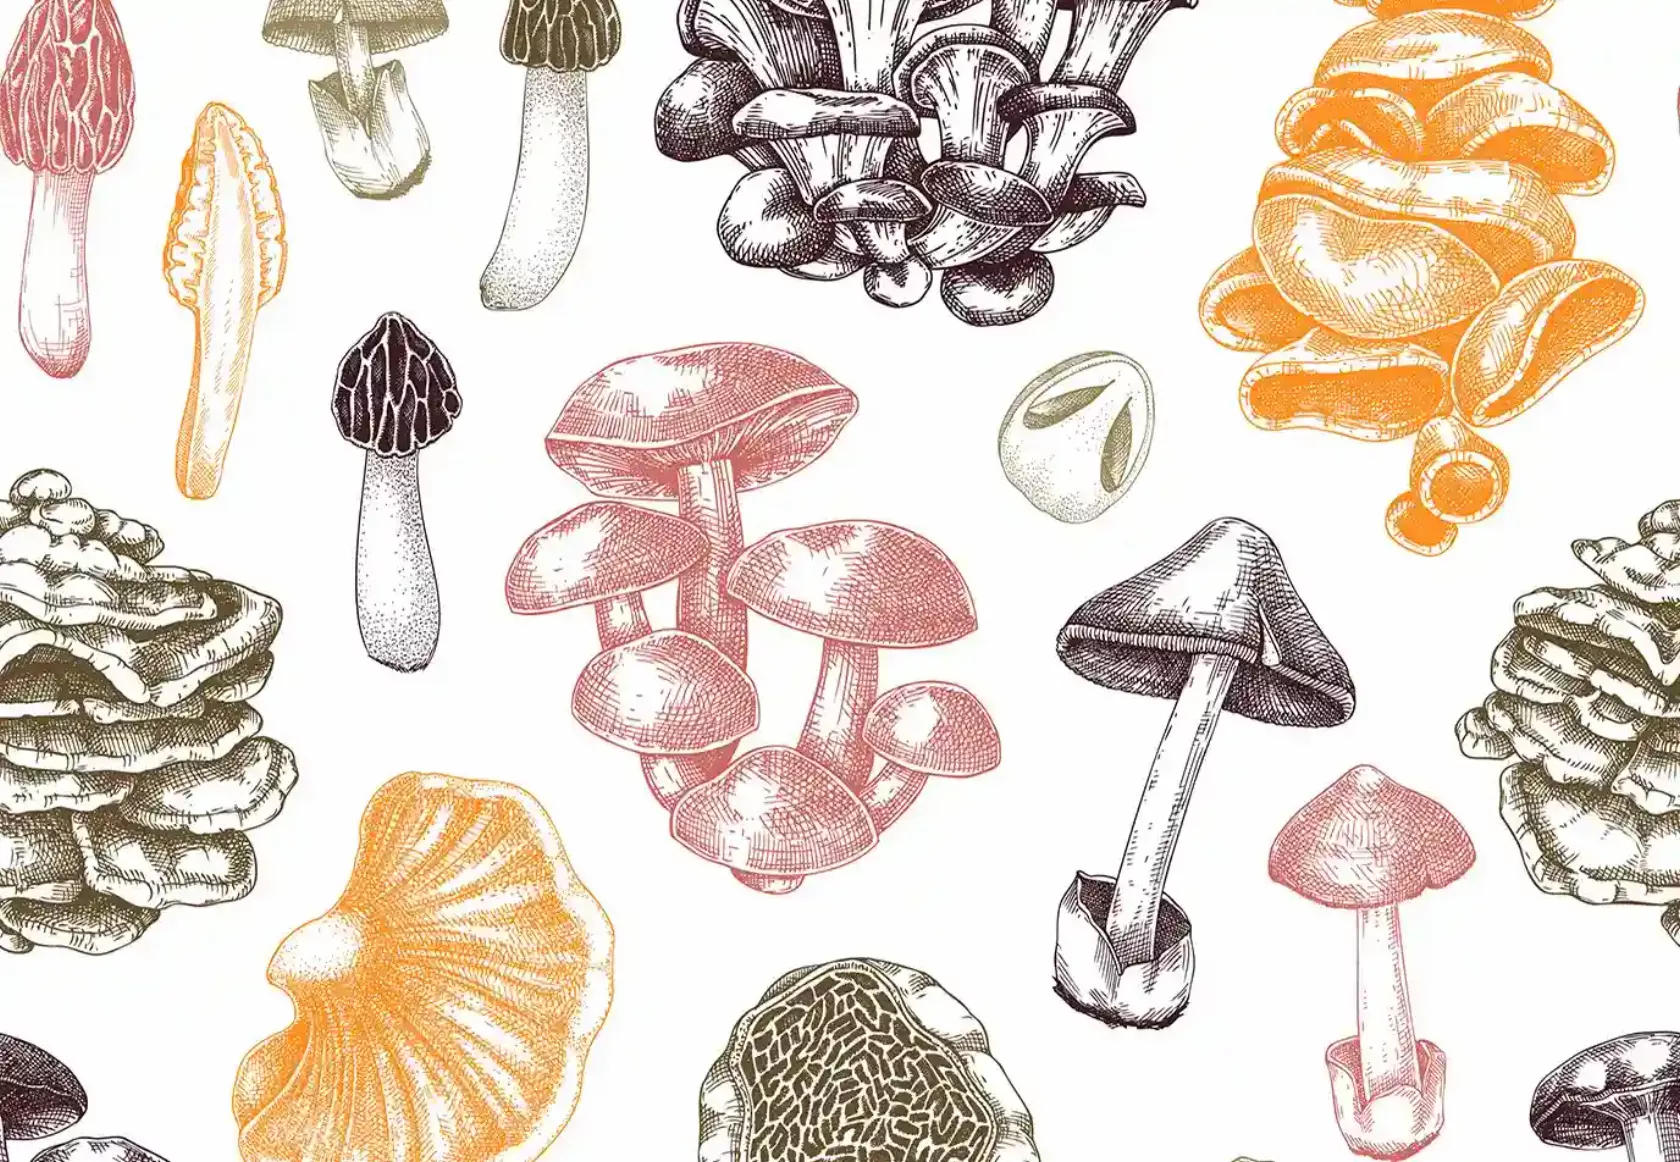 Illustration verschiedener Pilz-Sorten, Röhren- und Lamellenpilze, Lorcheln, usw.